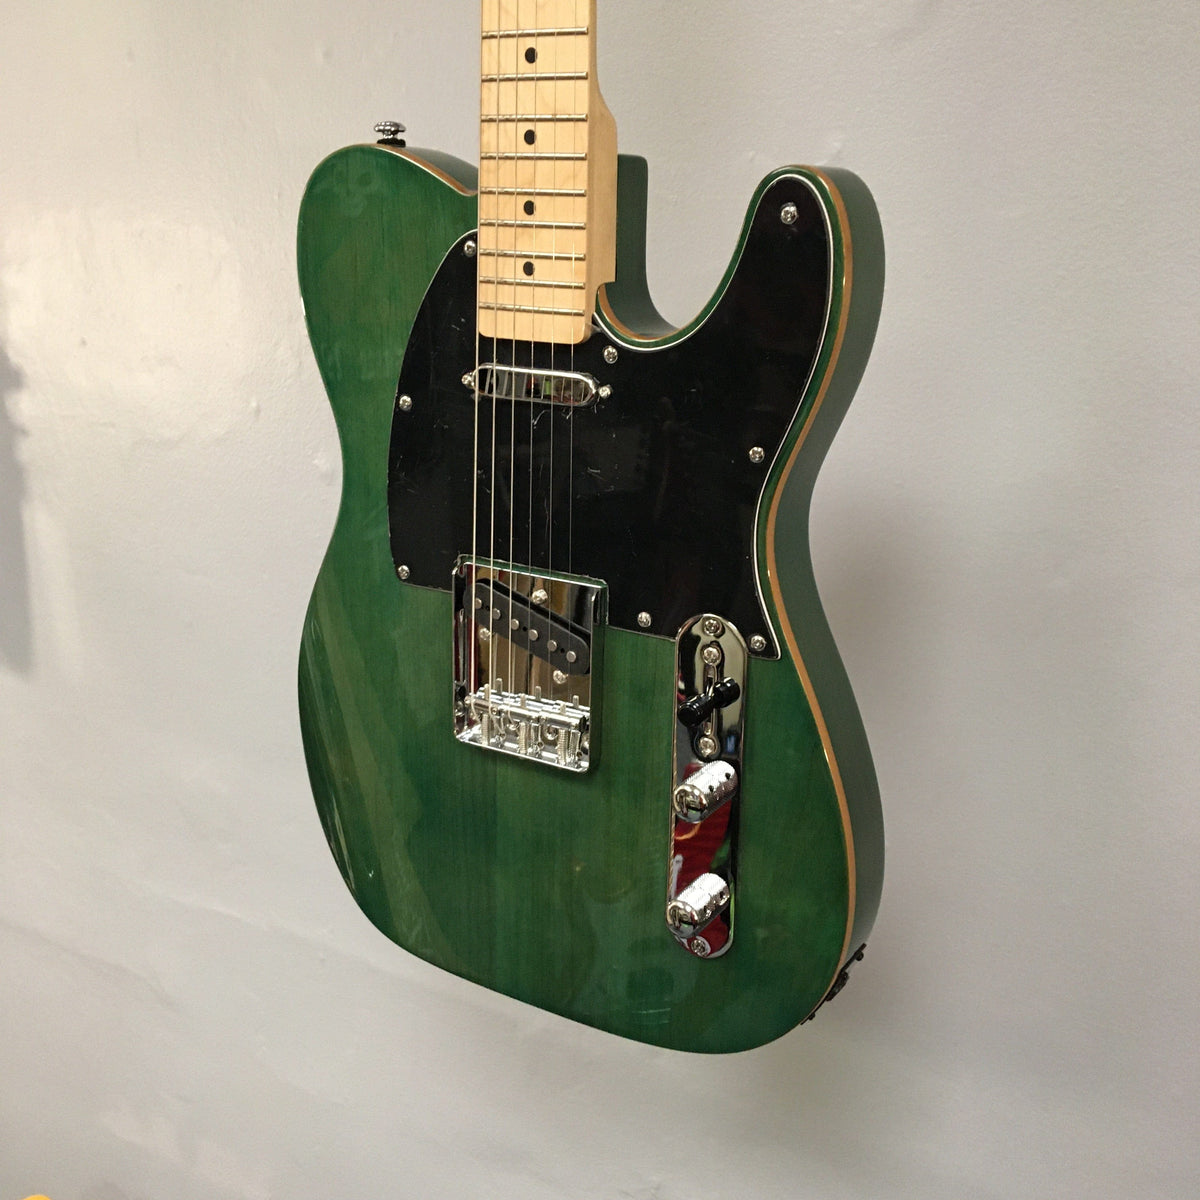 Michael Kelly 53 Forrest Green Prototype Guitars on Main